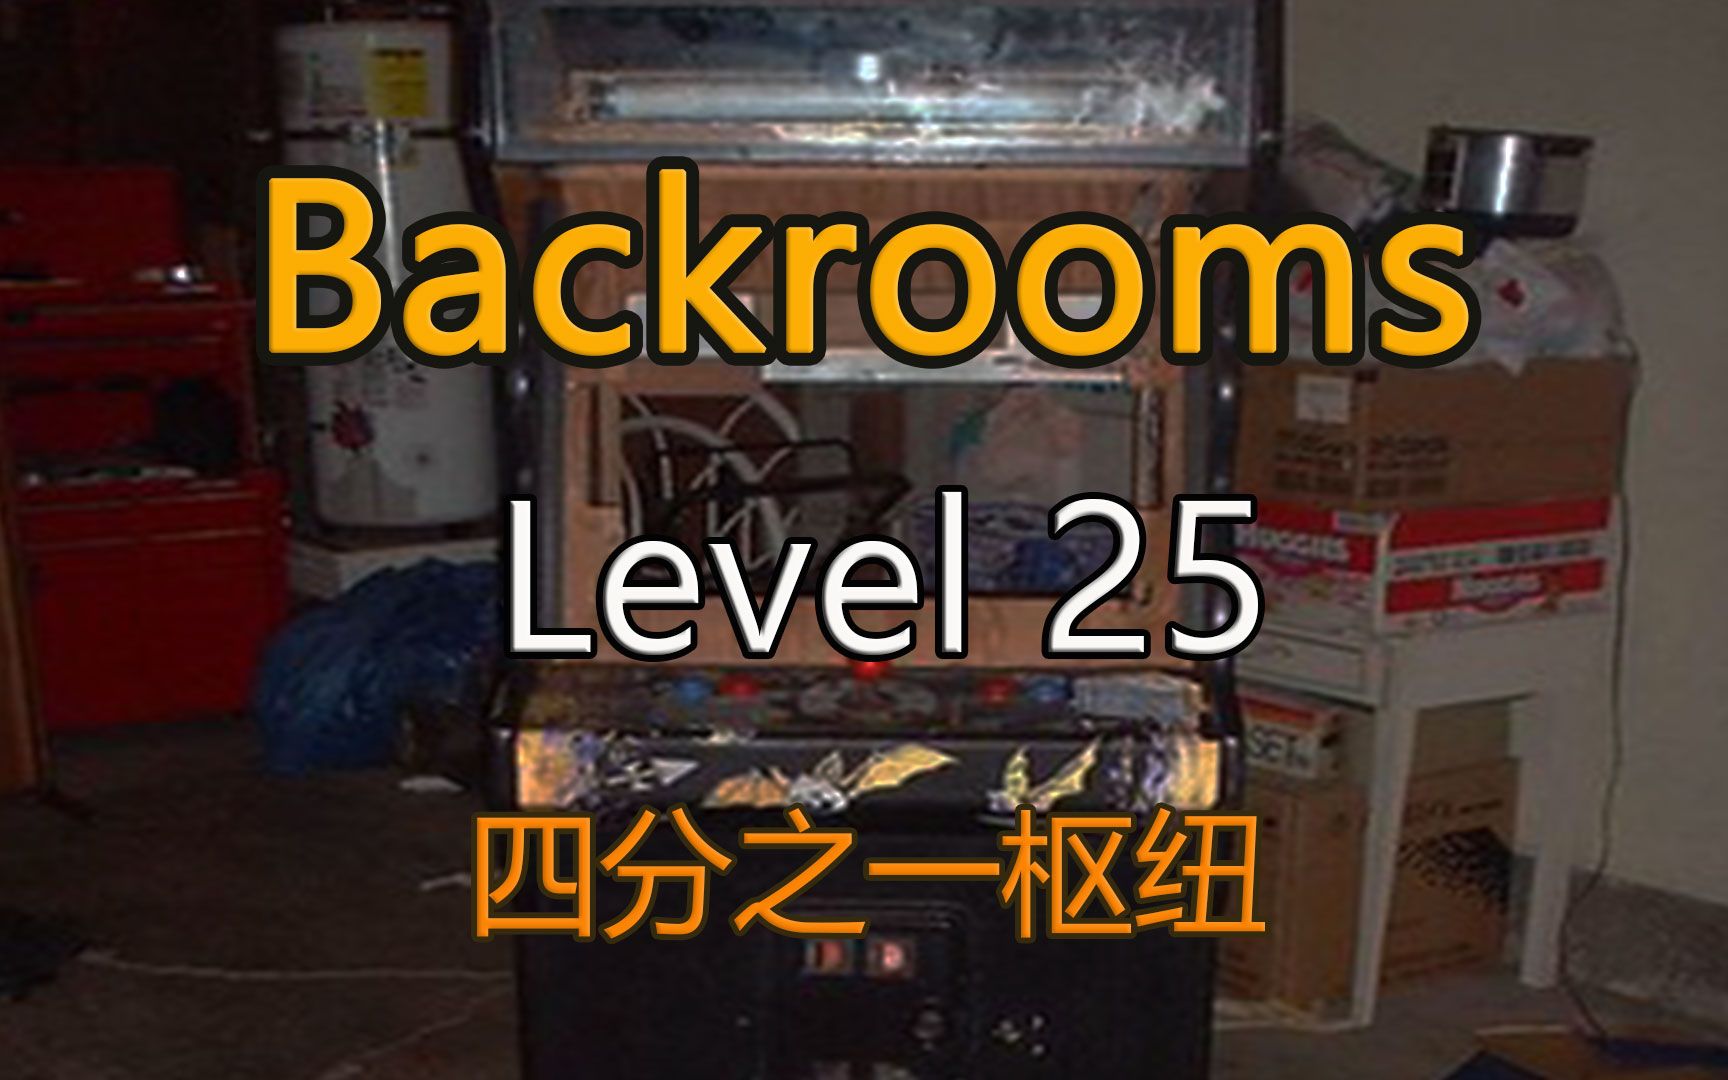 都市怪谈Backrooms  level  25  四分之一枢纽 后房 后室